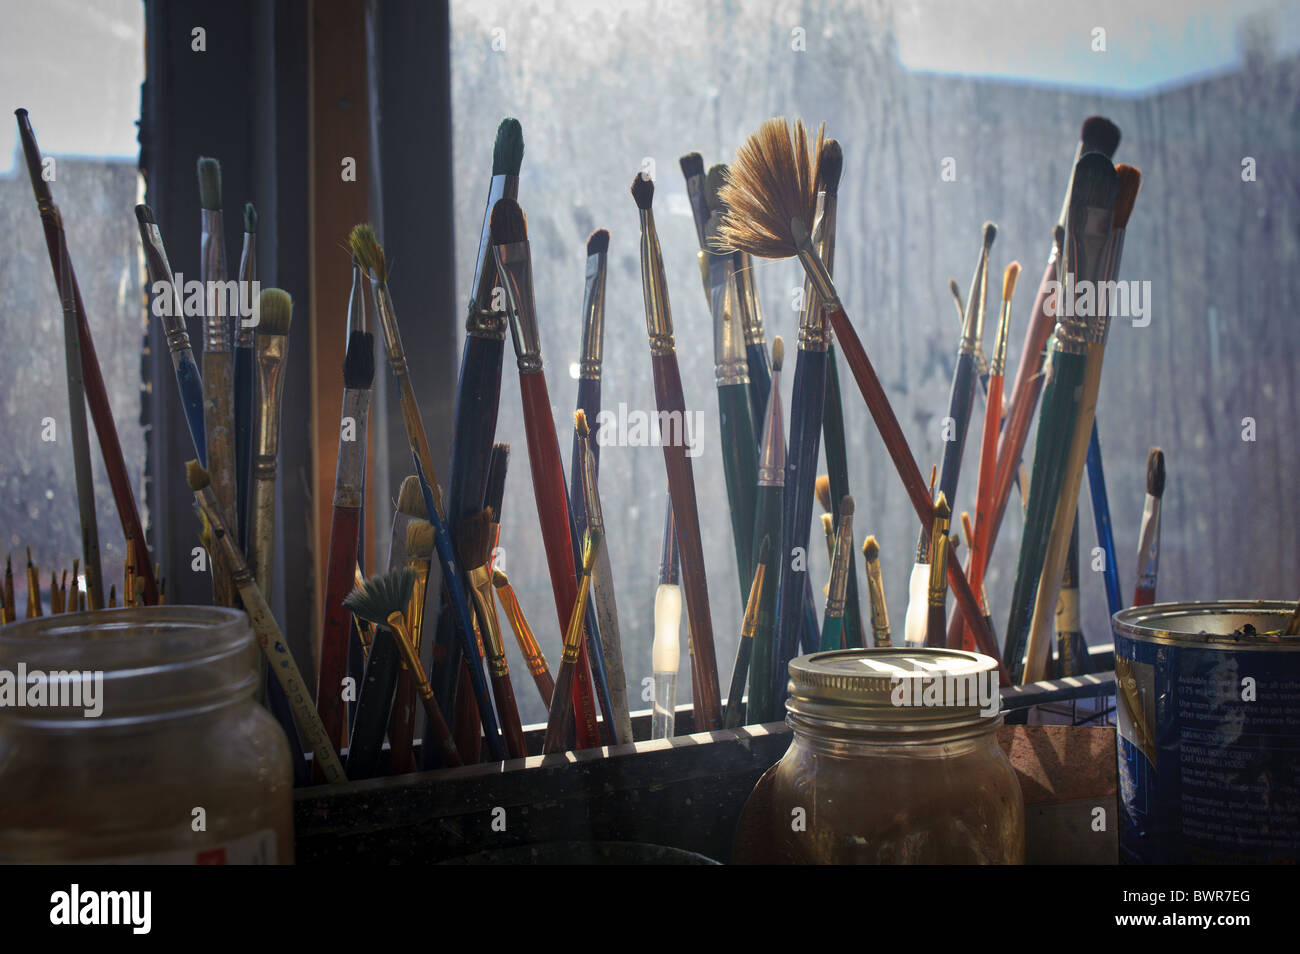 Artist paint brushed against window in artist studio Stock Photo